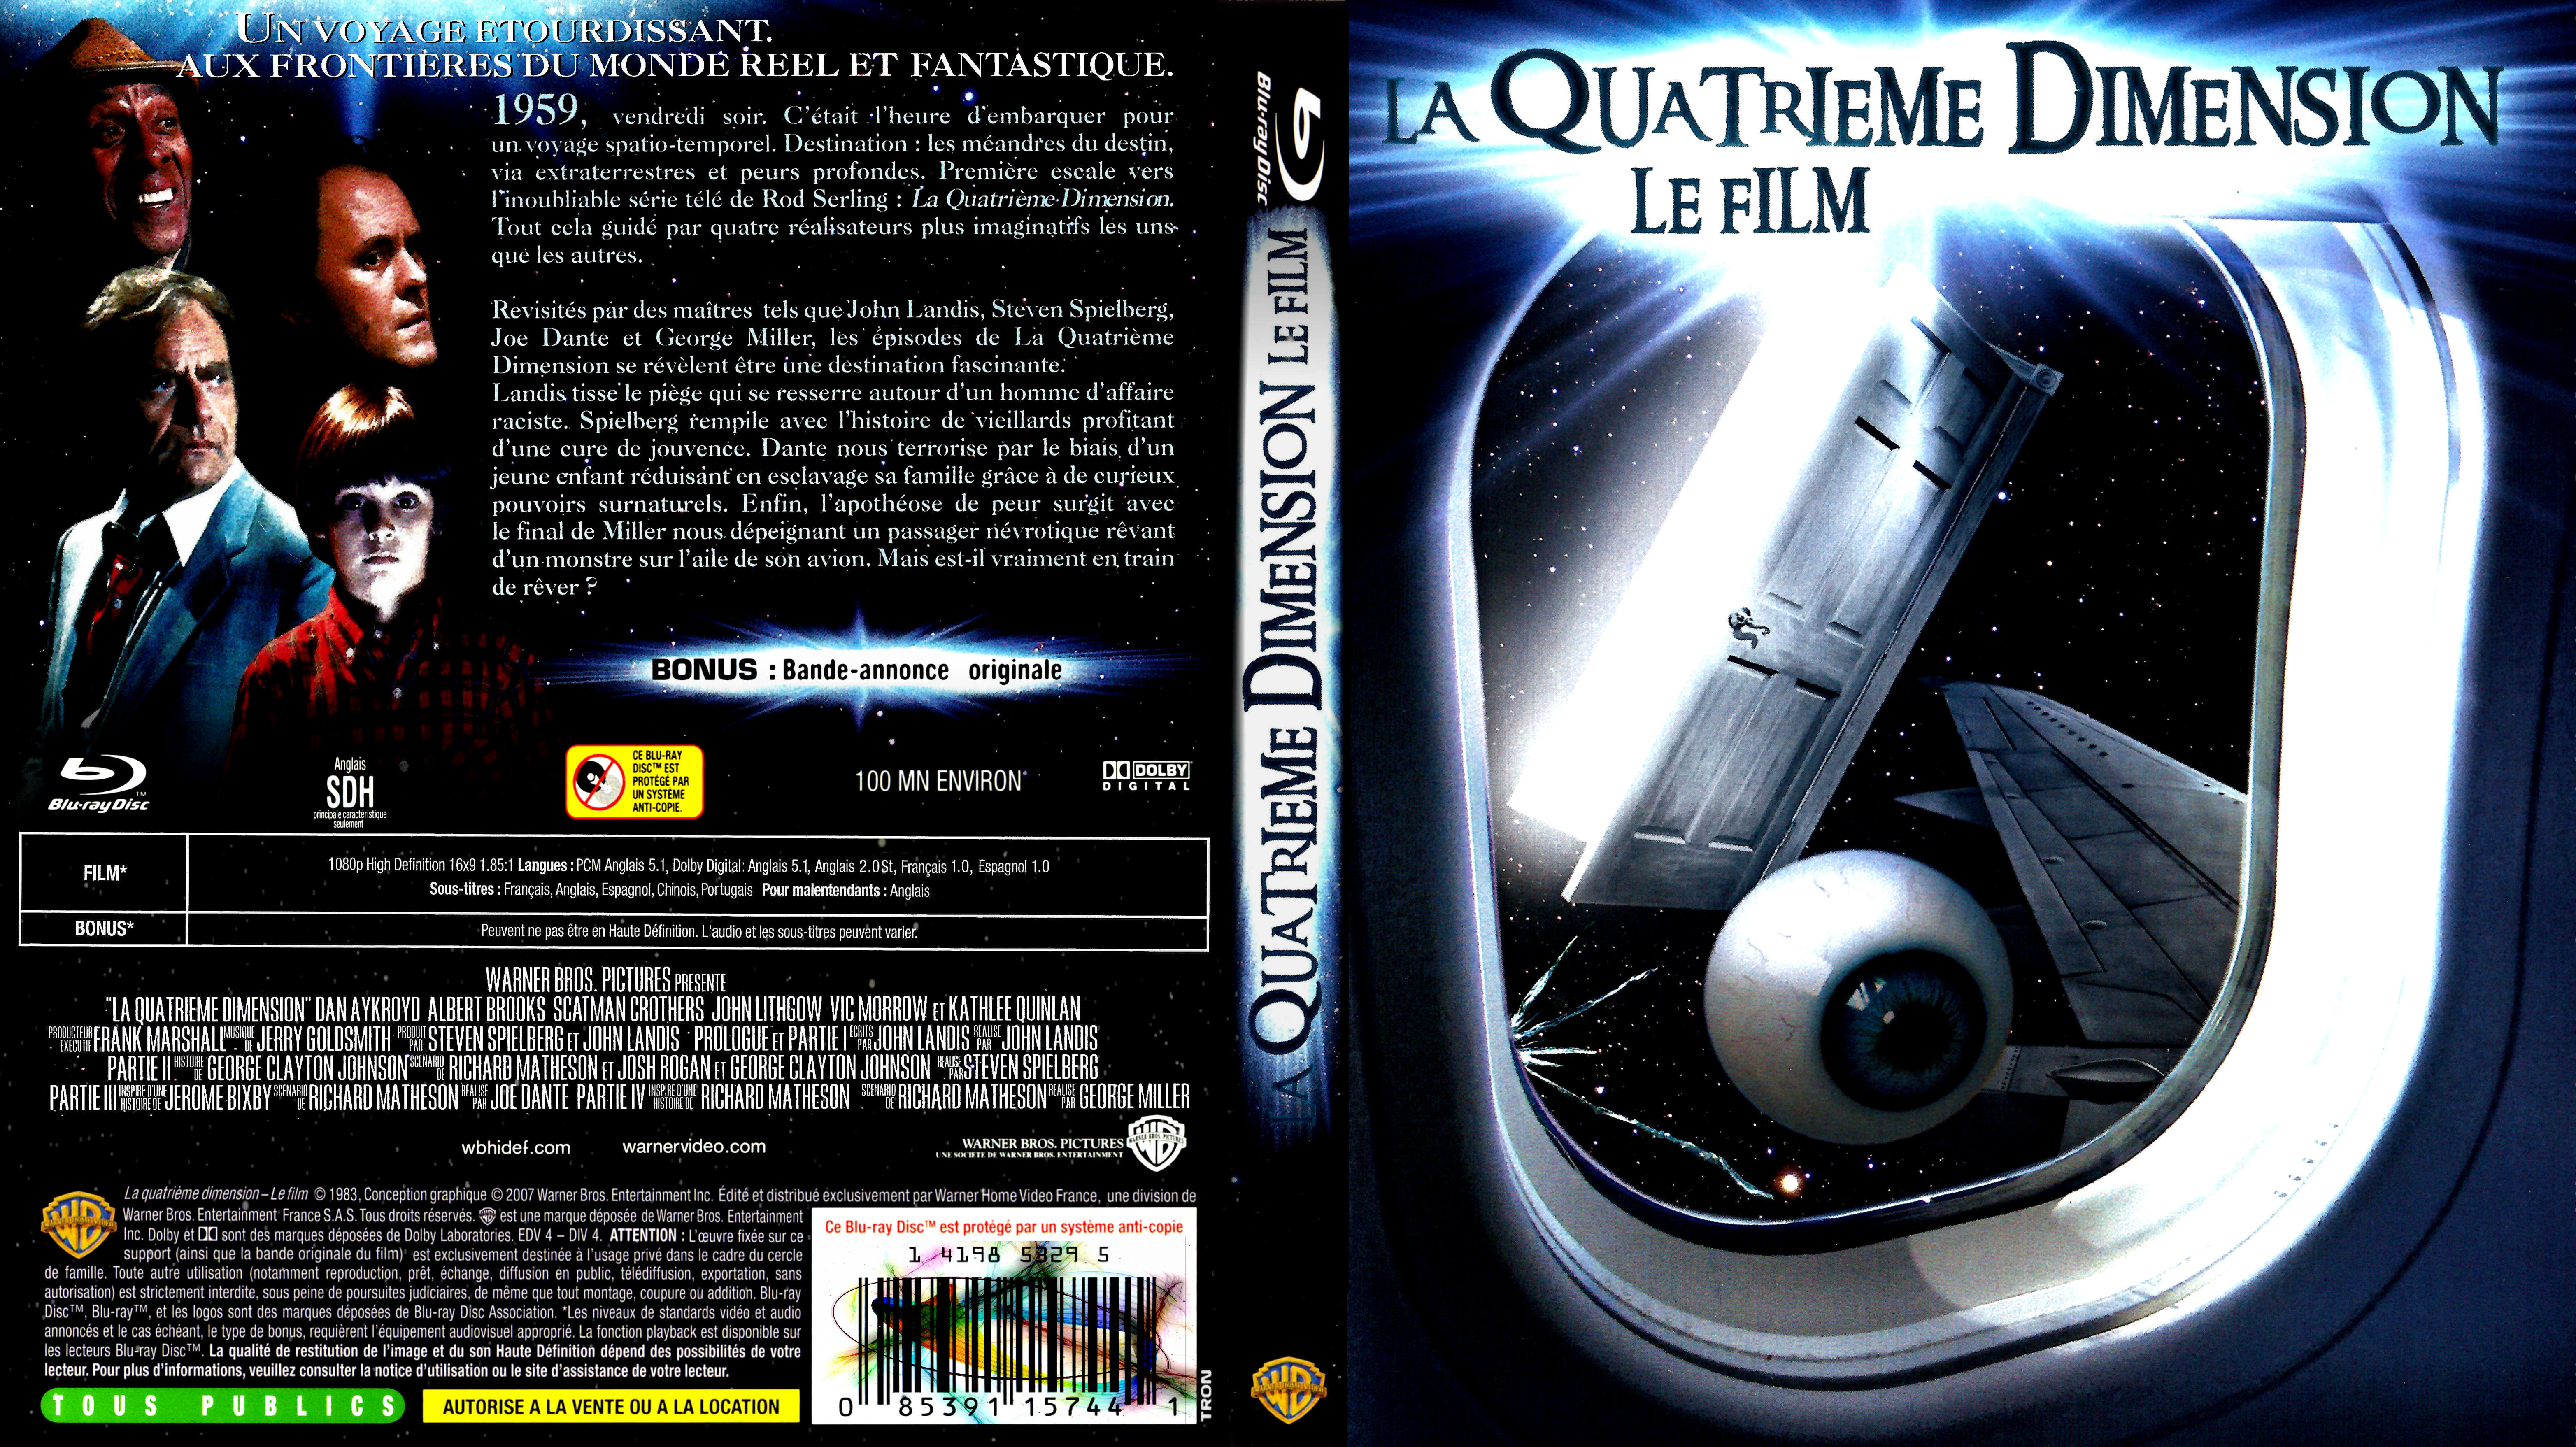 Jaquette DVD La quatrieme dimension le film custom (BLU-RAY) v2